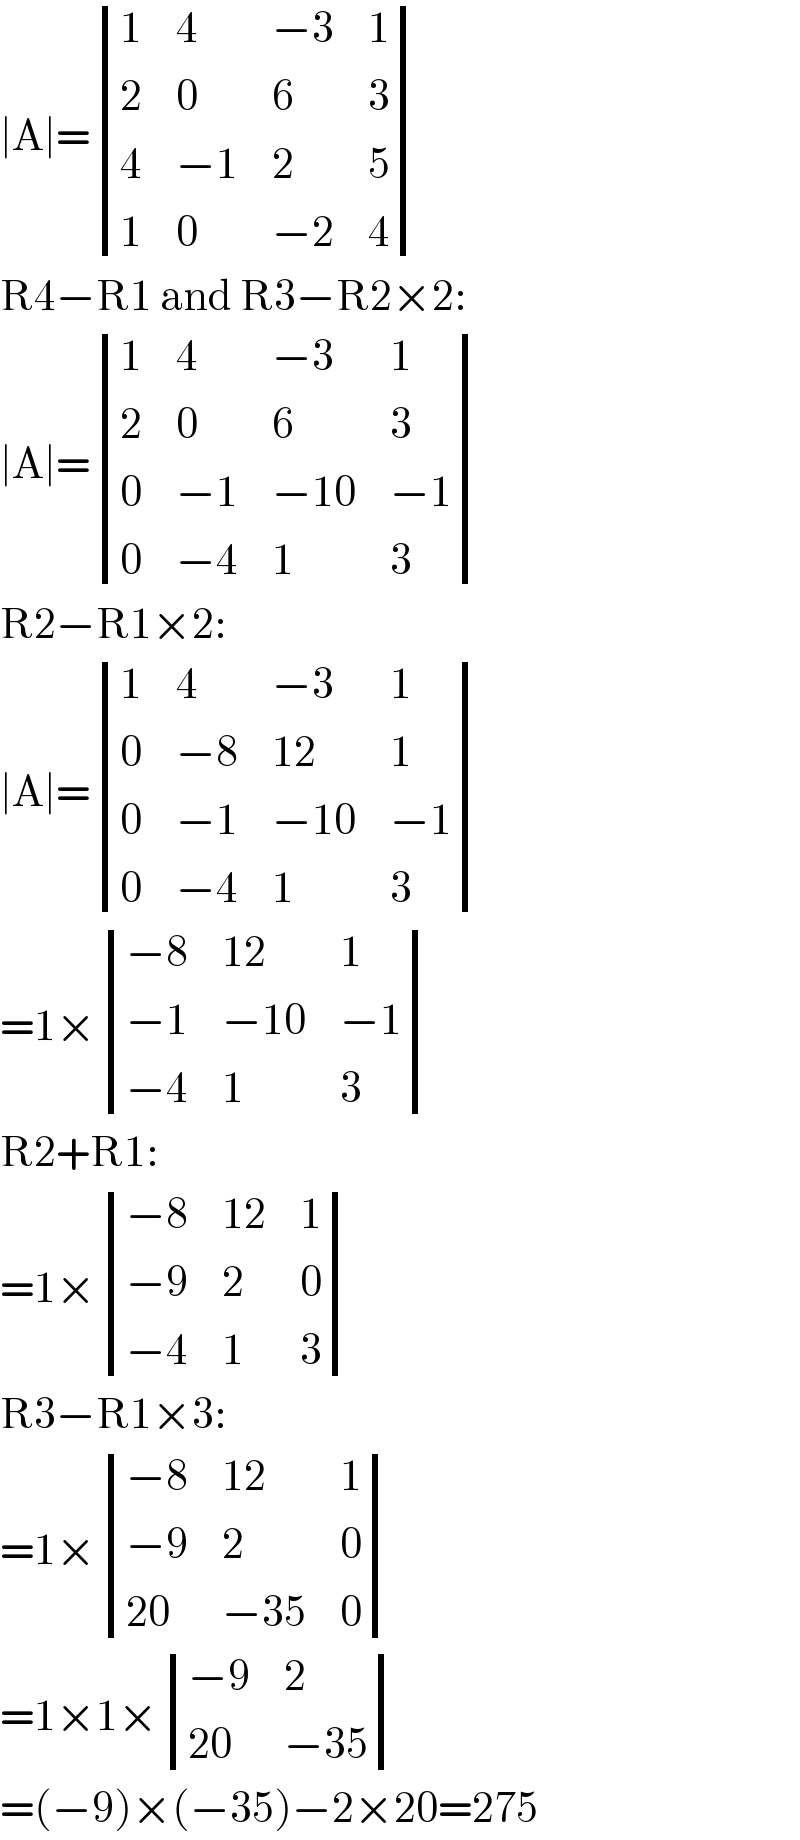 ∣A∣= determinant ((1,4,(−3),1),(2,0,6,3),(4,(−1),2,5),(1,0,(−2),4))  R4−R1 and R3−R2×2:  ∣A∣= determinant ((1,4,(−3),1),(2,0,6,3),(0,(−1),(−10),(−1)),(0,(−4),1,3))  R2−R1×2:  ∣A∣= determinant ((1,4,(−3),1),(0,(−8),(12),1),(0,(−1),(−10),(−1)),(0,(−4),1,3))  =1× determinant (((−8),(12),1),((−1),(−10),(−1)),((−4),1,3))  R2+R1:  =1× determinant (((−8),(12),1),((−9),2,0),((−4),1,3))  R3−R1×3:  =1× determinant (((−8),(12),1),((−9),2,0),((20),(−35),0))  =1×1× determinant (((−9),2),((20),(−35)))  =(−9)×(−35)−2×20=275  